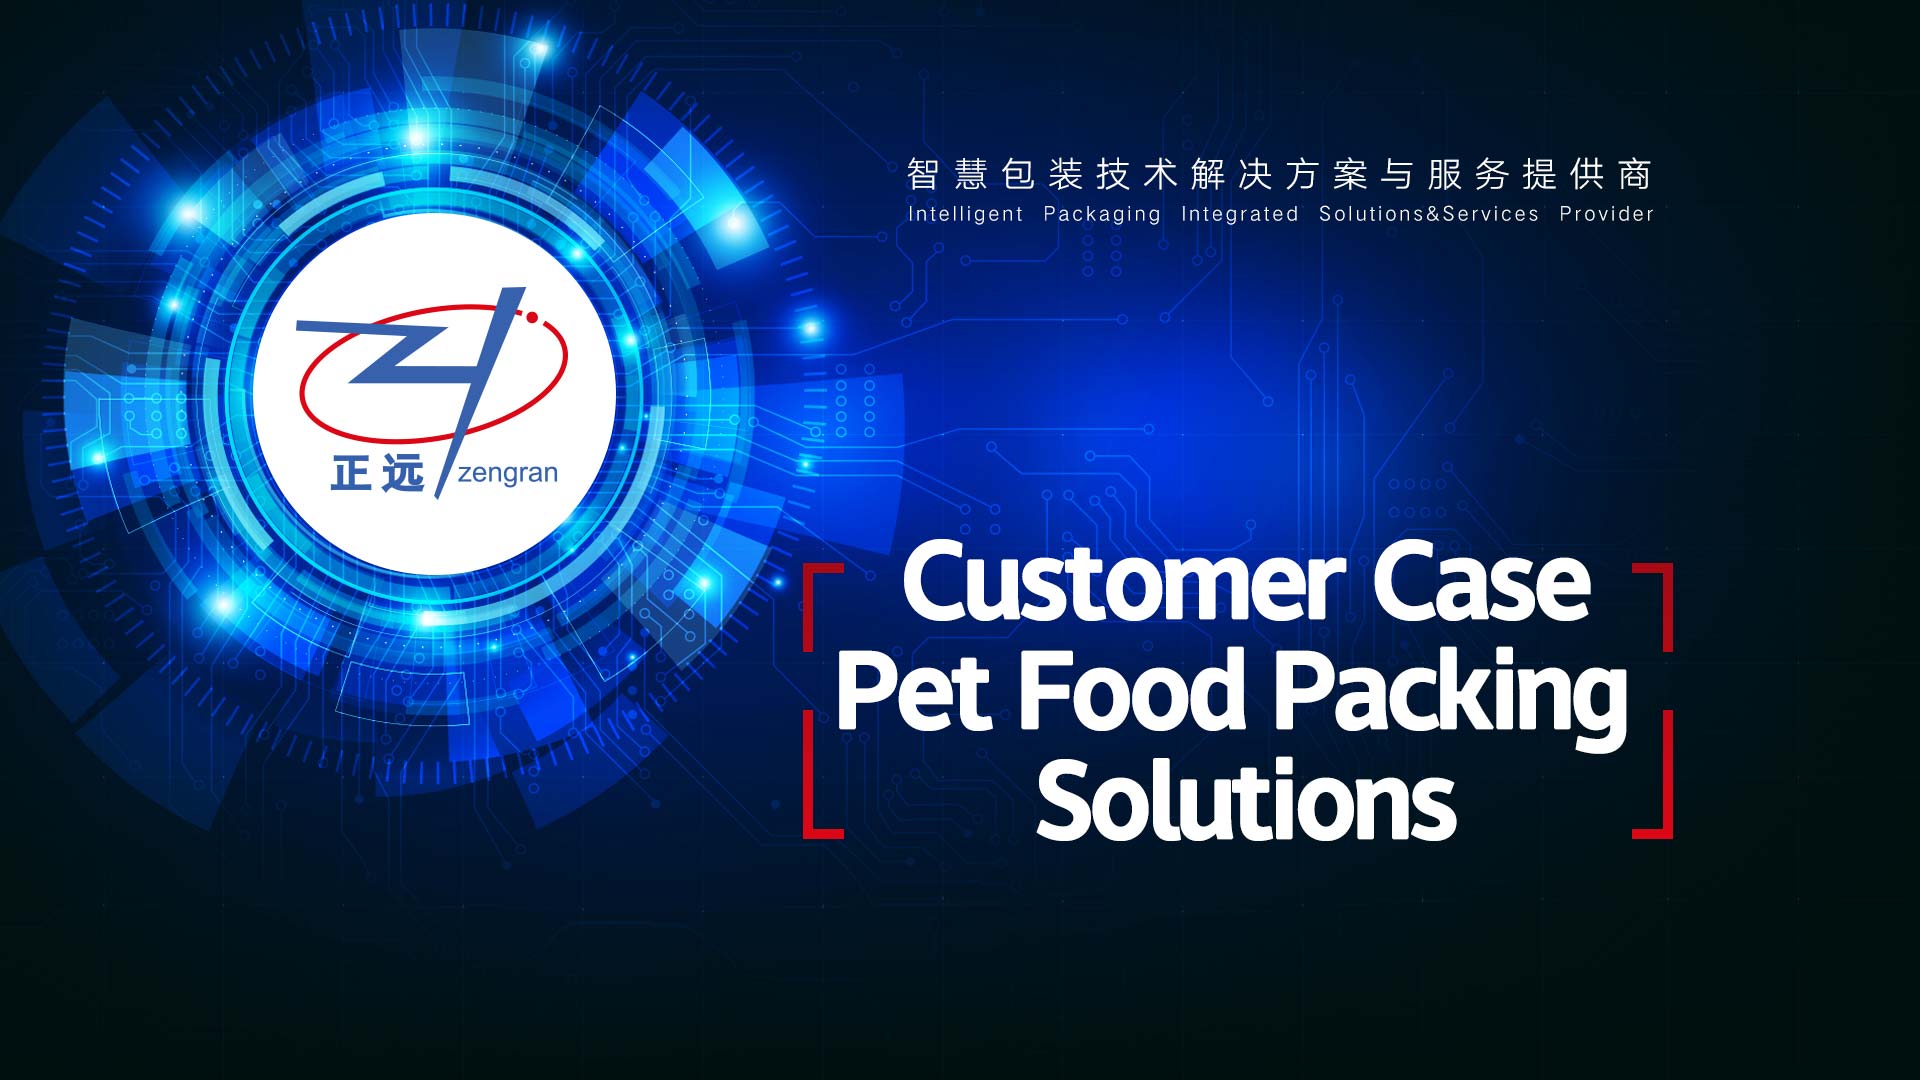 Customer Case: Animal Food Pet Food Packaging Solutions